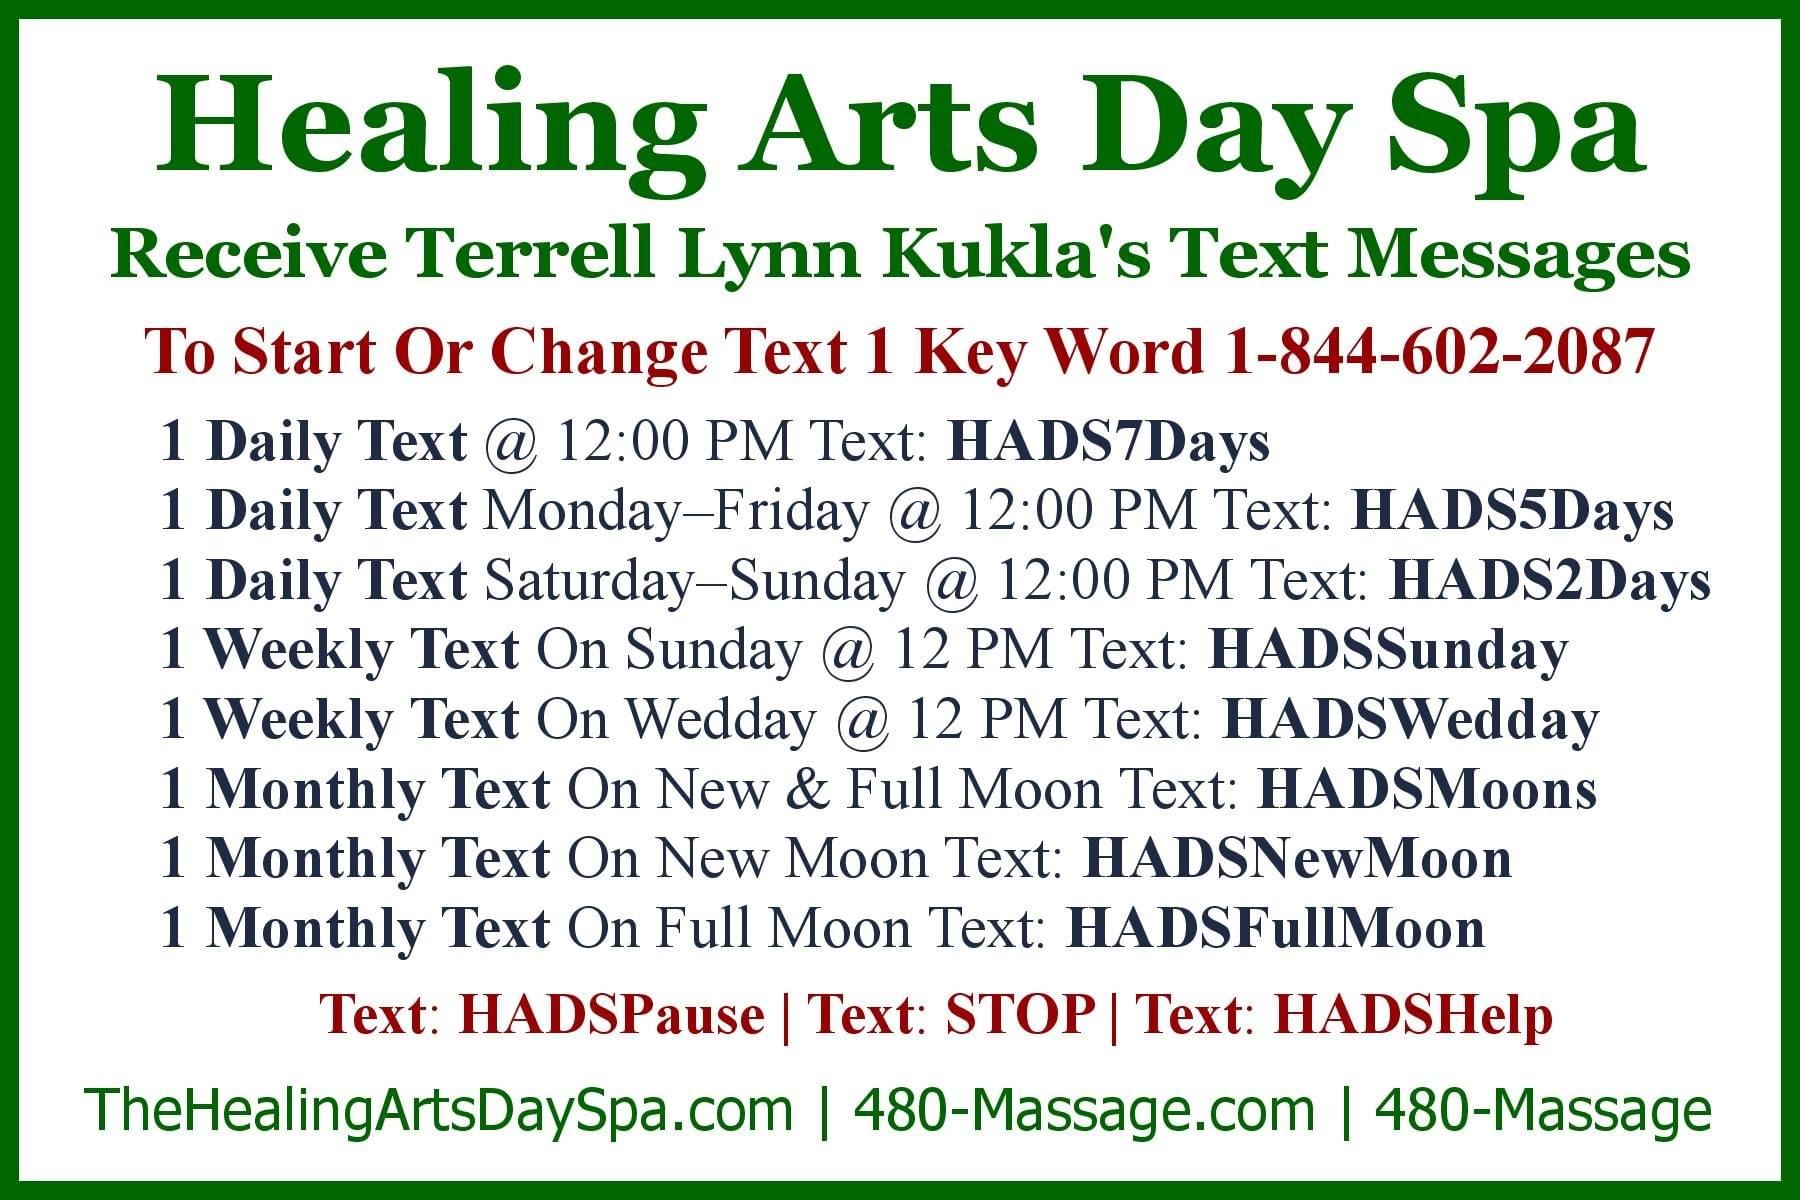 Healing Arts Day Spa, The Healing Arts Day Spa, A Healing Arts Day Spa, Terrell Lynn, Terrell Lynn Kukla, Russell Kukla, Russell warren Kukla, 480--Massage, 480-Massage.com, Jurlique, Jurlique Organic Spa Facials, RWK2TLK.US, TLK2RWK.US